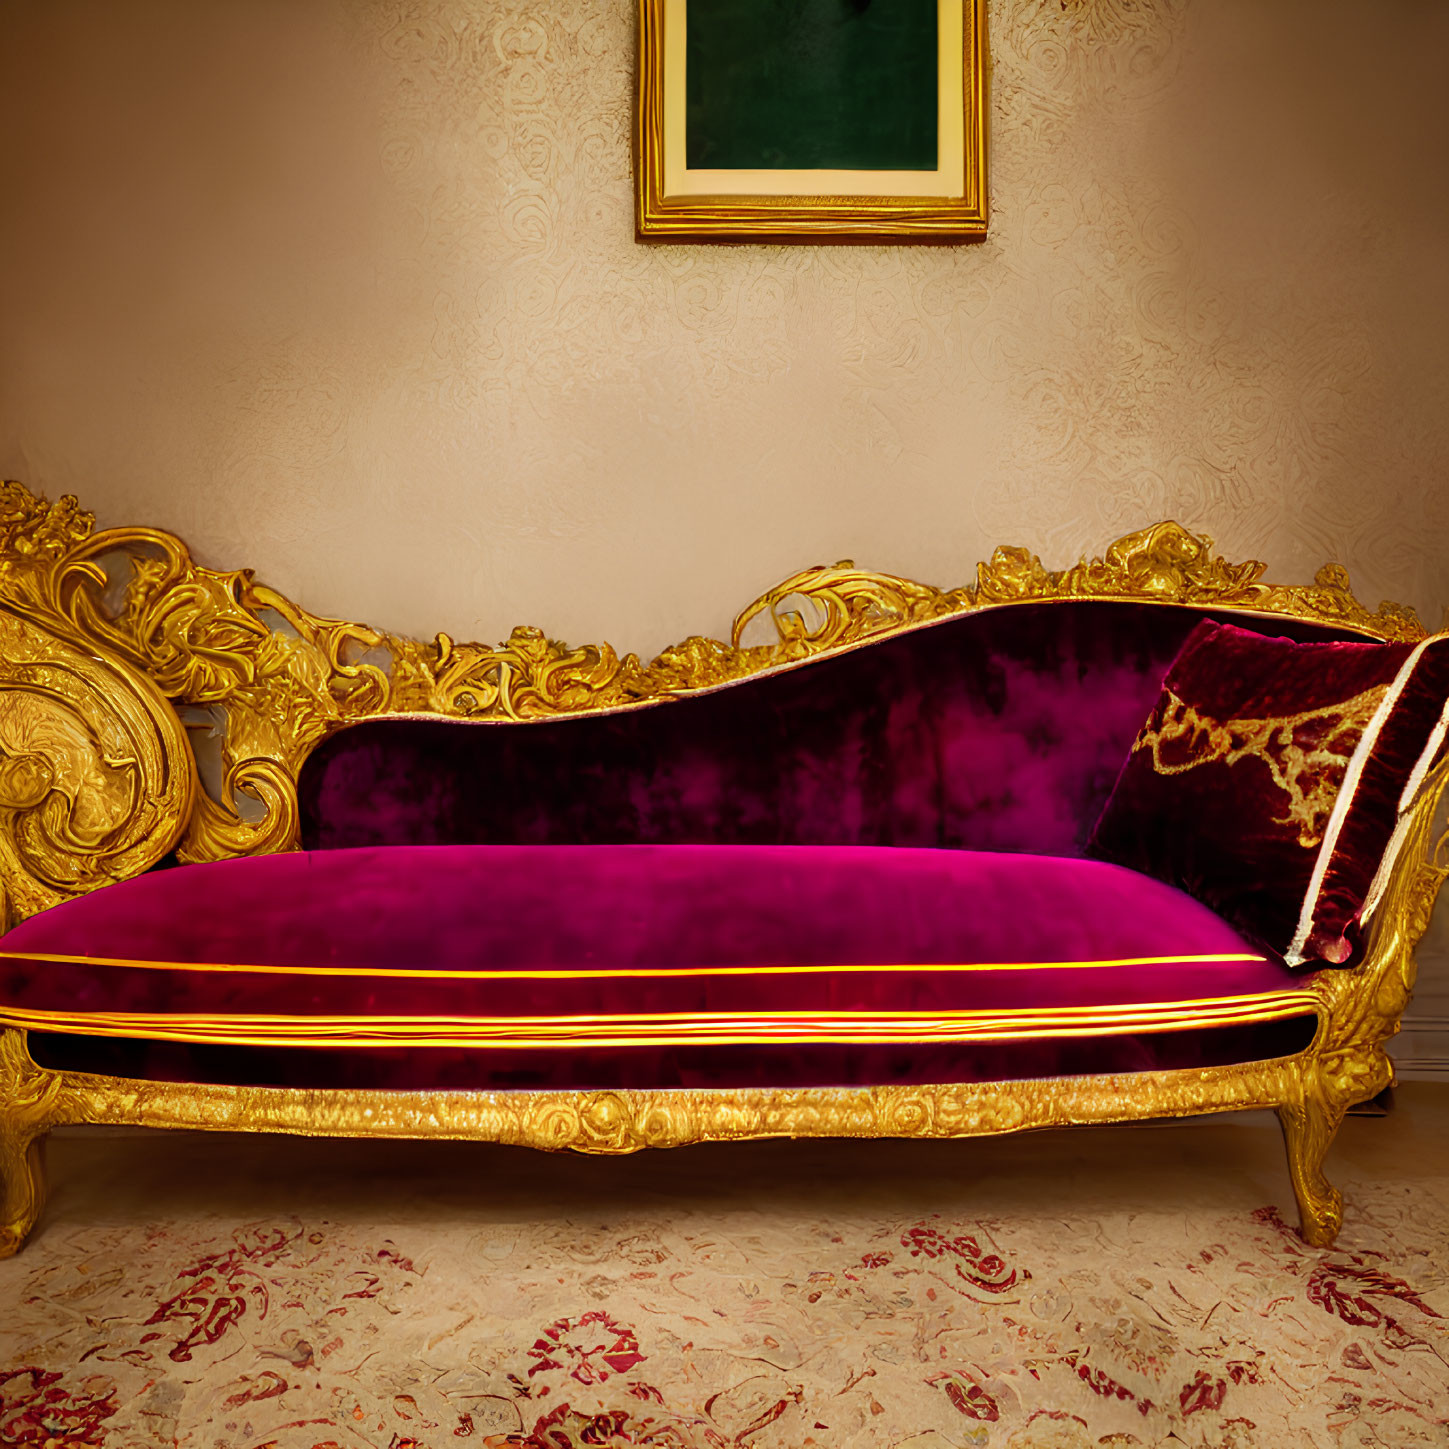 Luxurious Golden Chaise Lounge with Purple Velvet Upholstery in Elegant Room